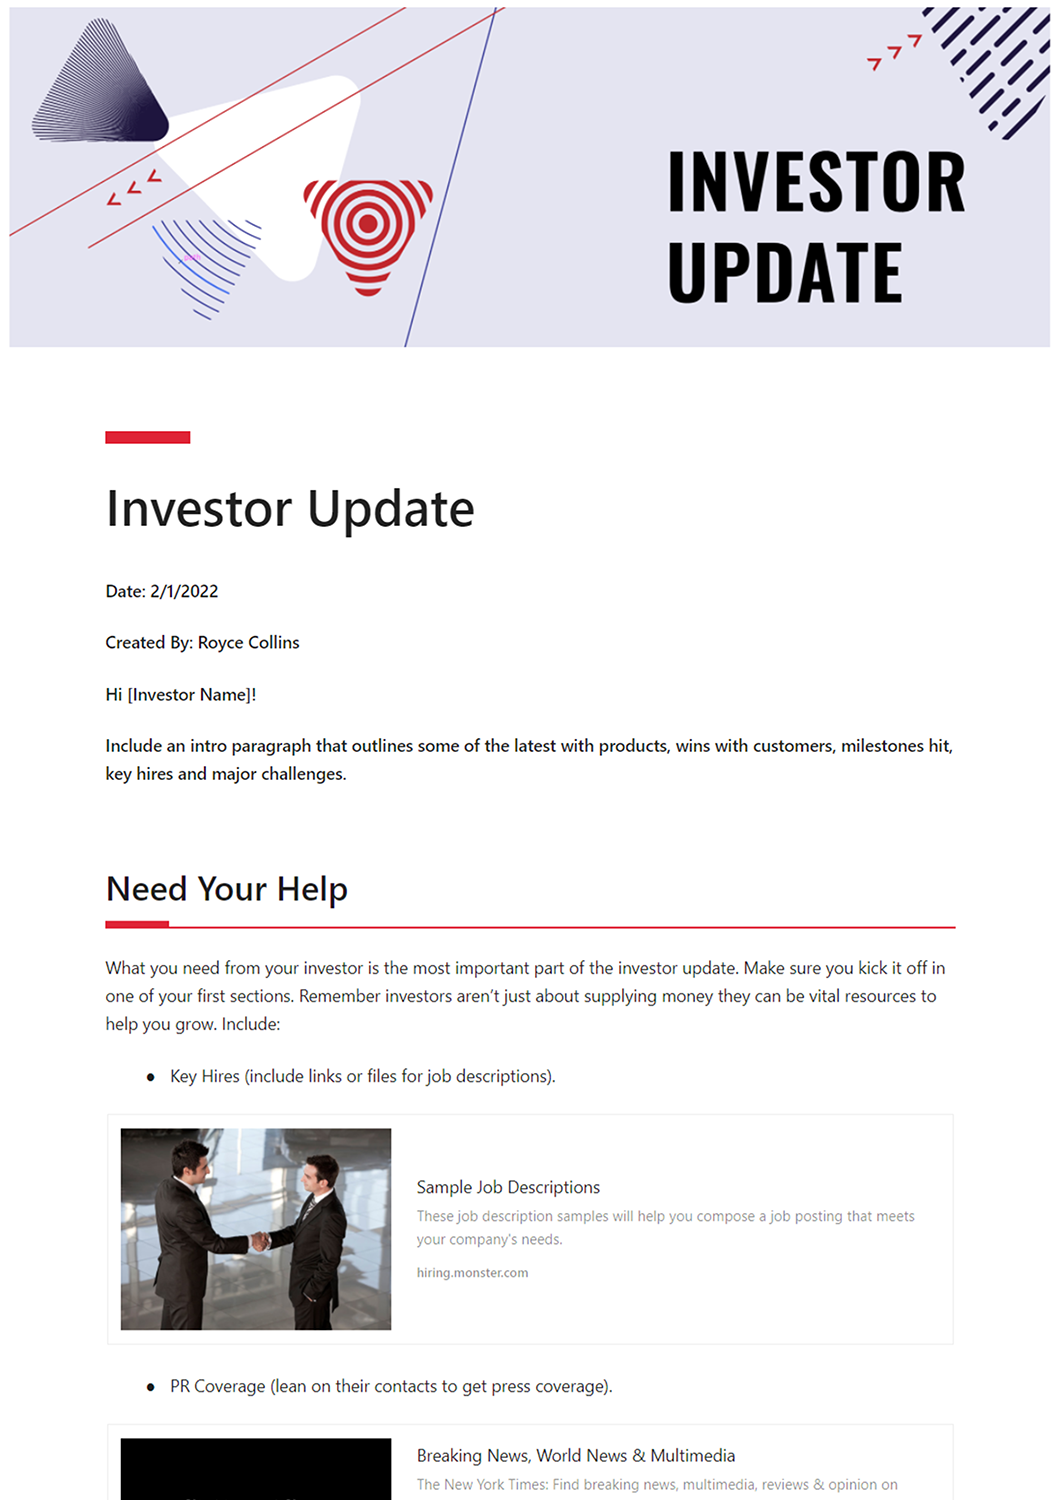 Investor update template